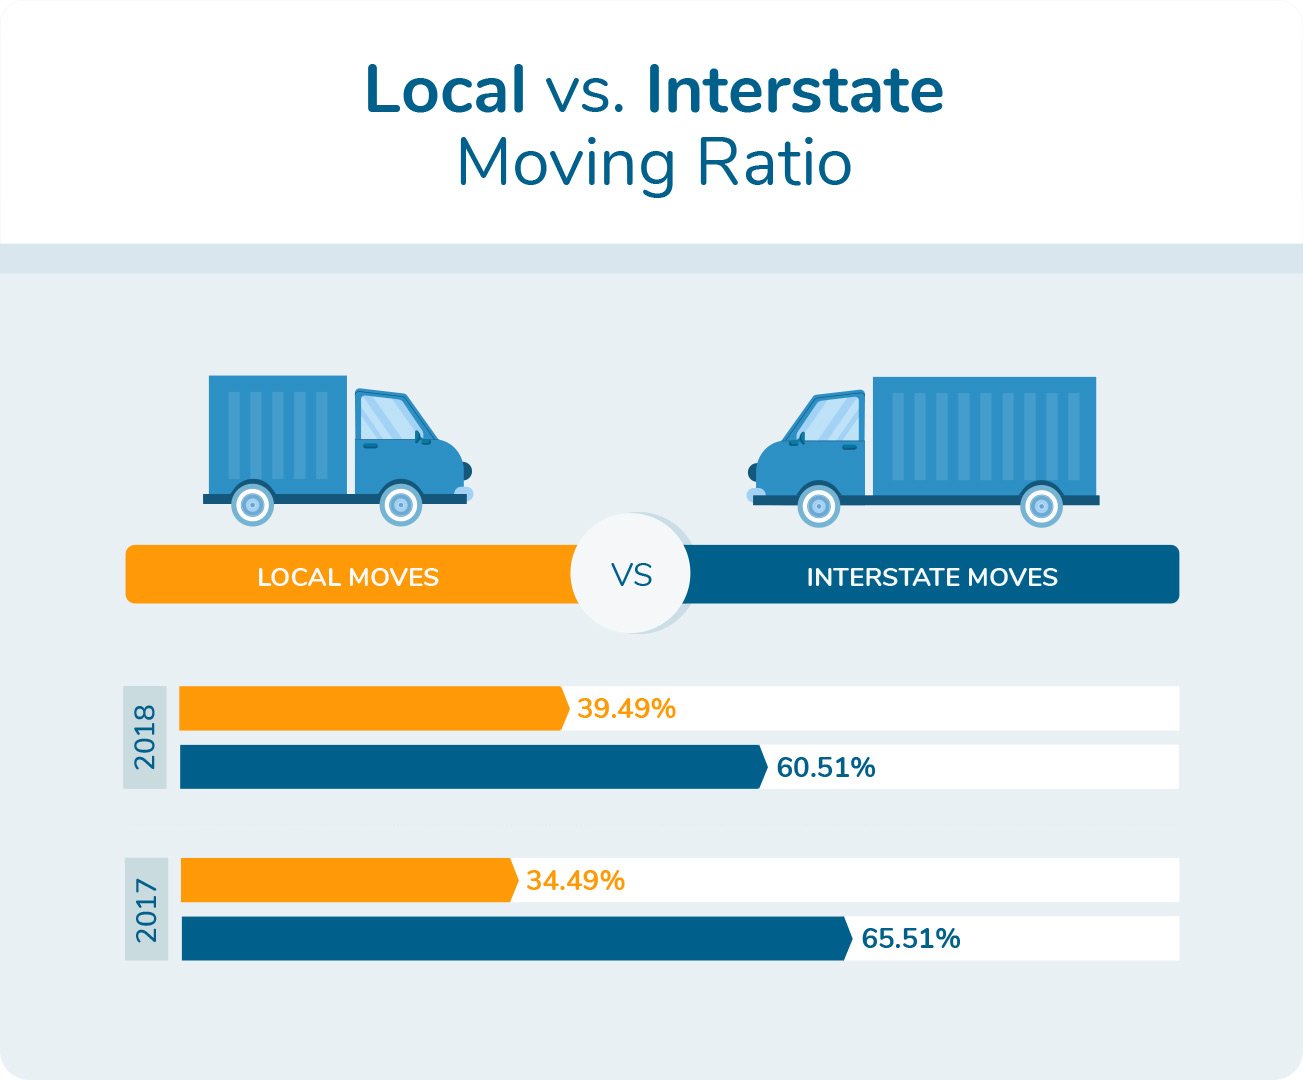 Local vs. Interstate Moving Ratio